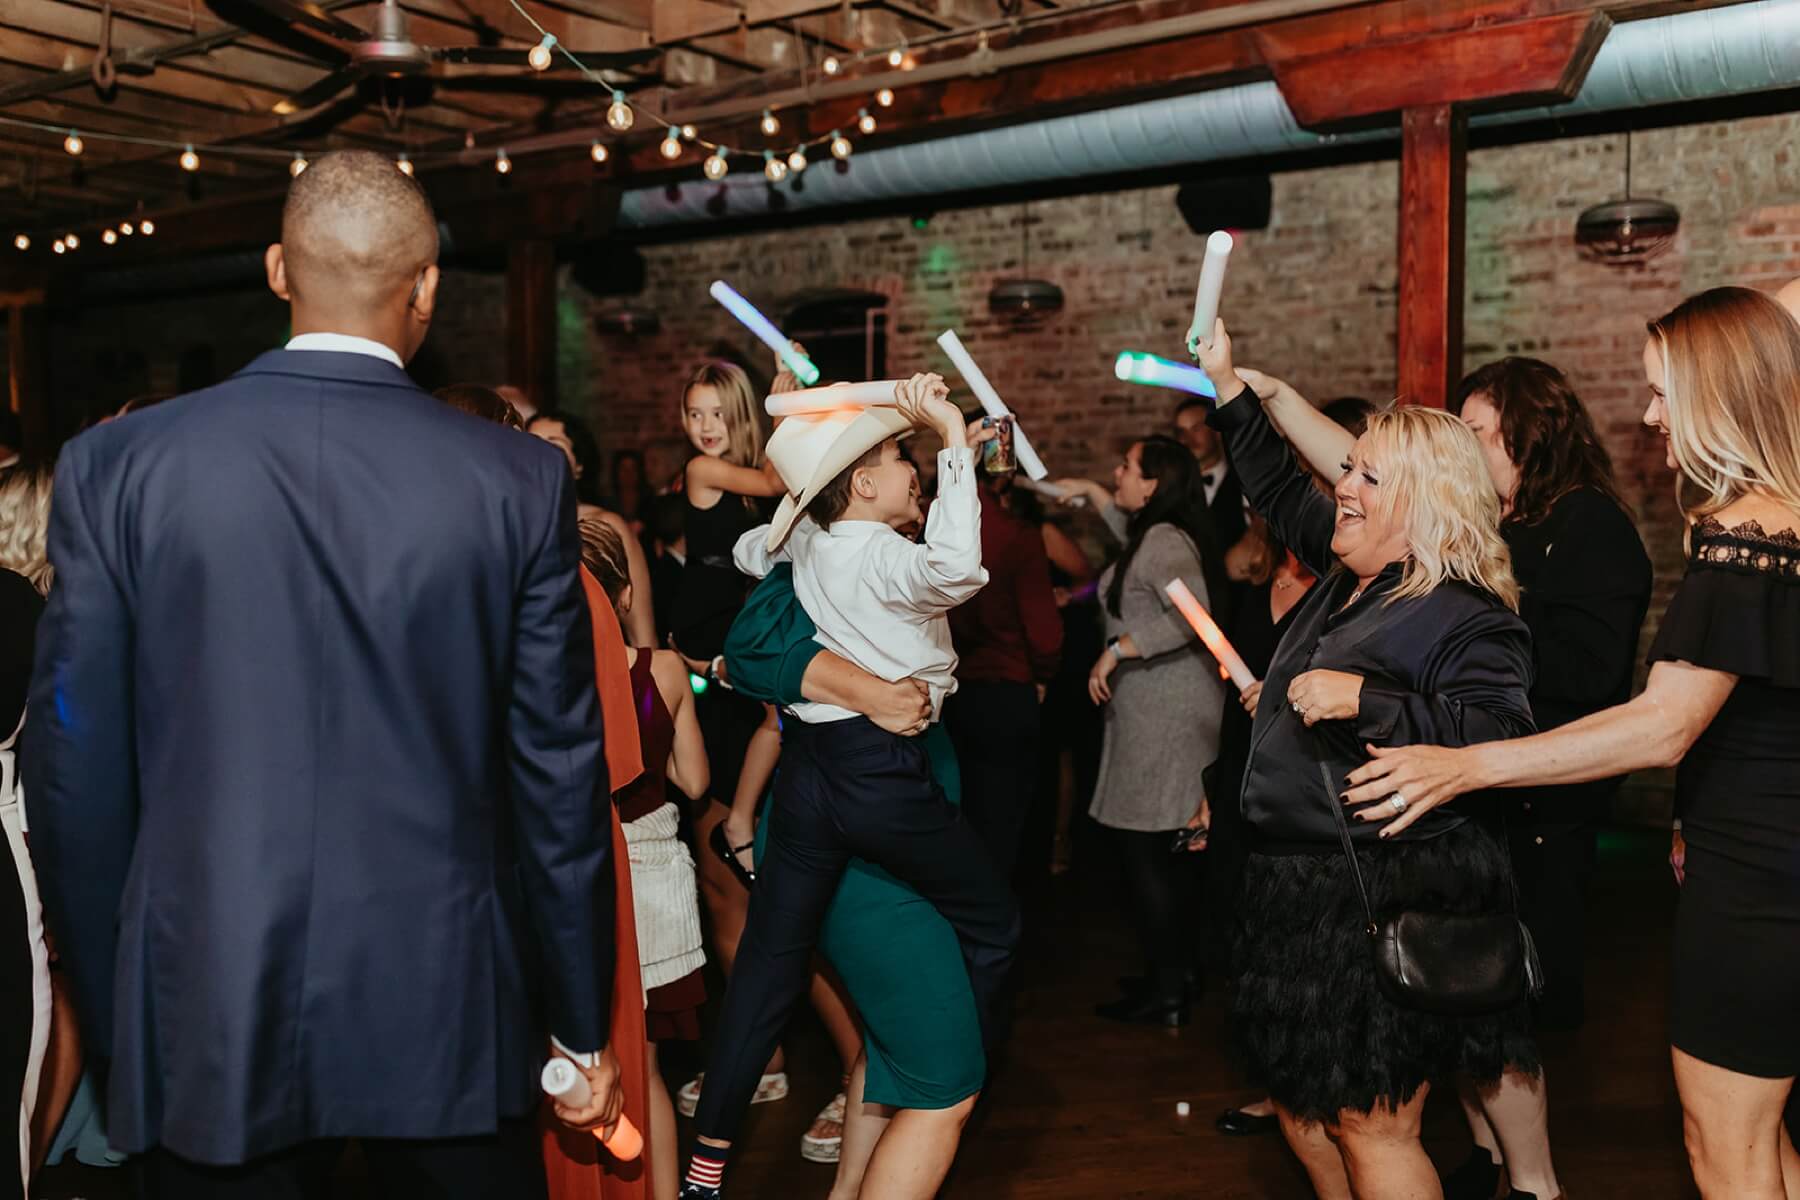 Wedding guests dancing with foam glow sticks